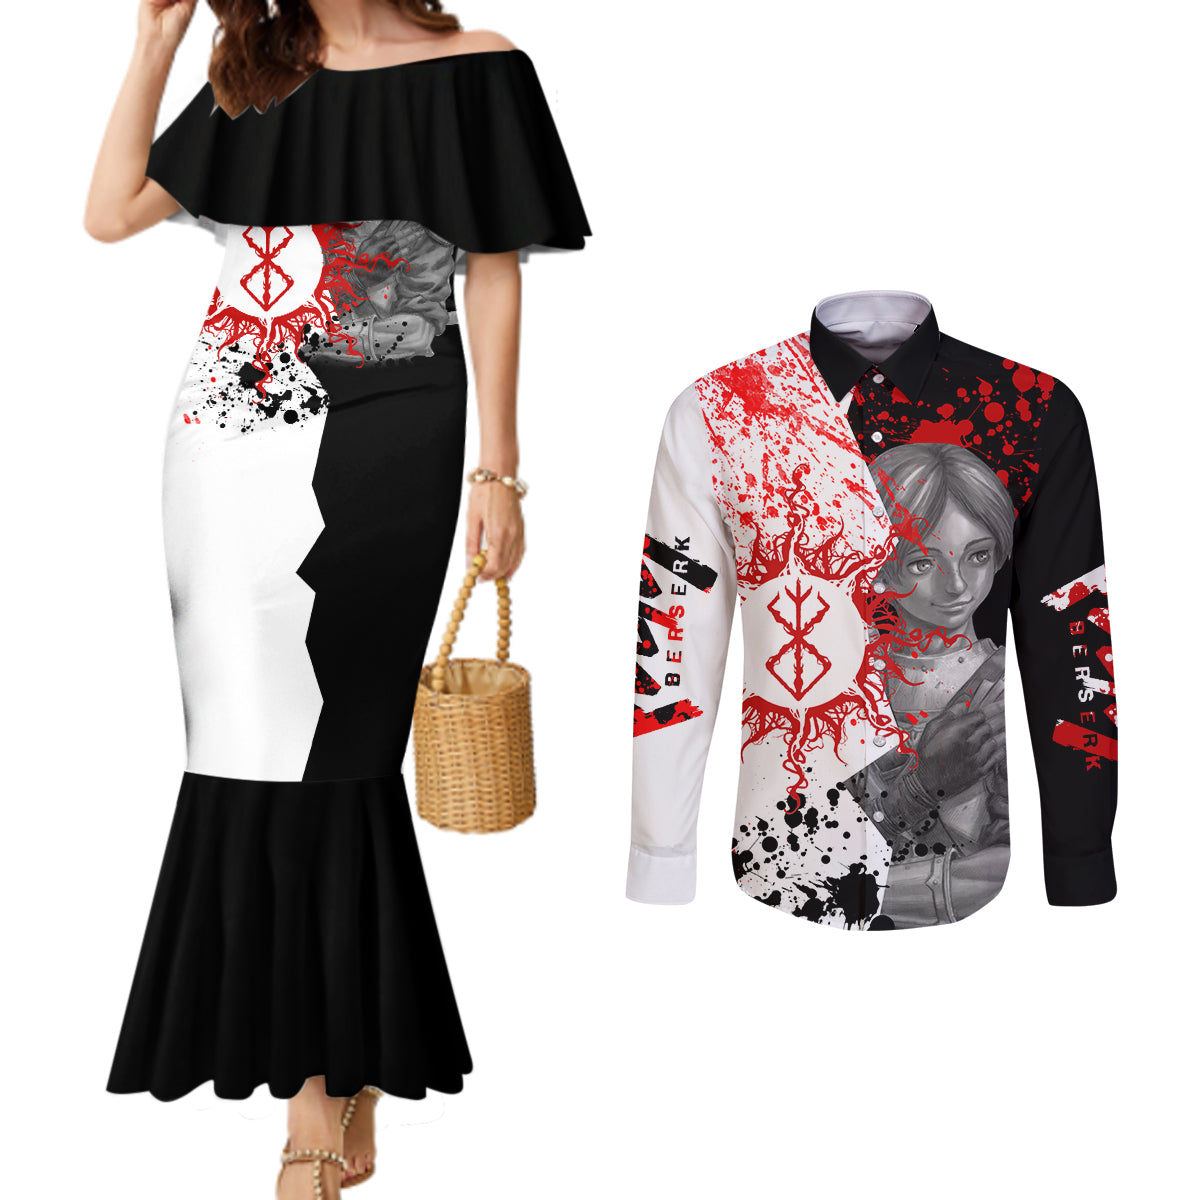 Judeau Berserk Couples Matching Mermaid Dress and Long Sleeve Button Shirt Anime Run Symbol Blood Style